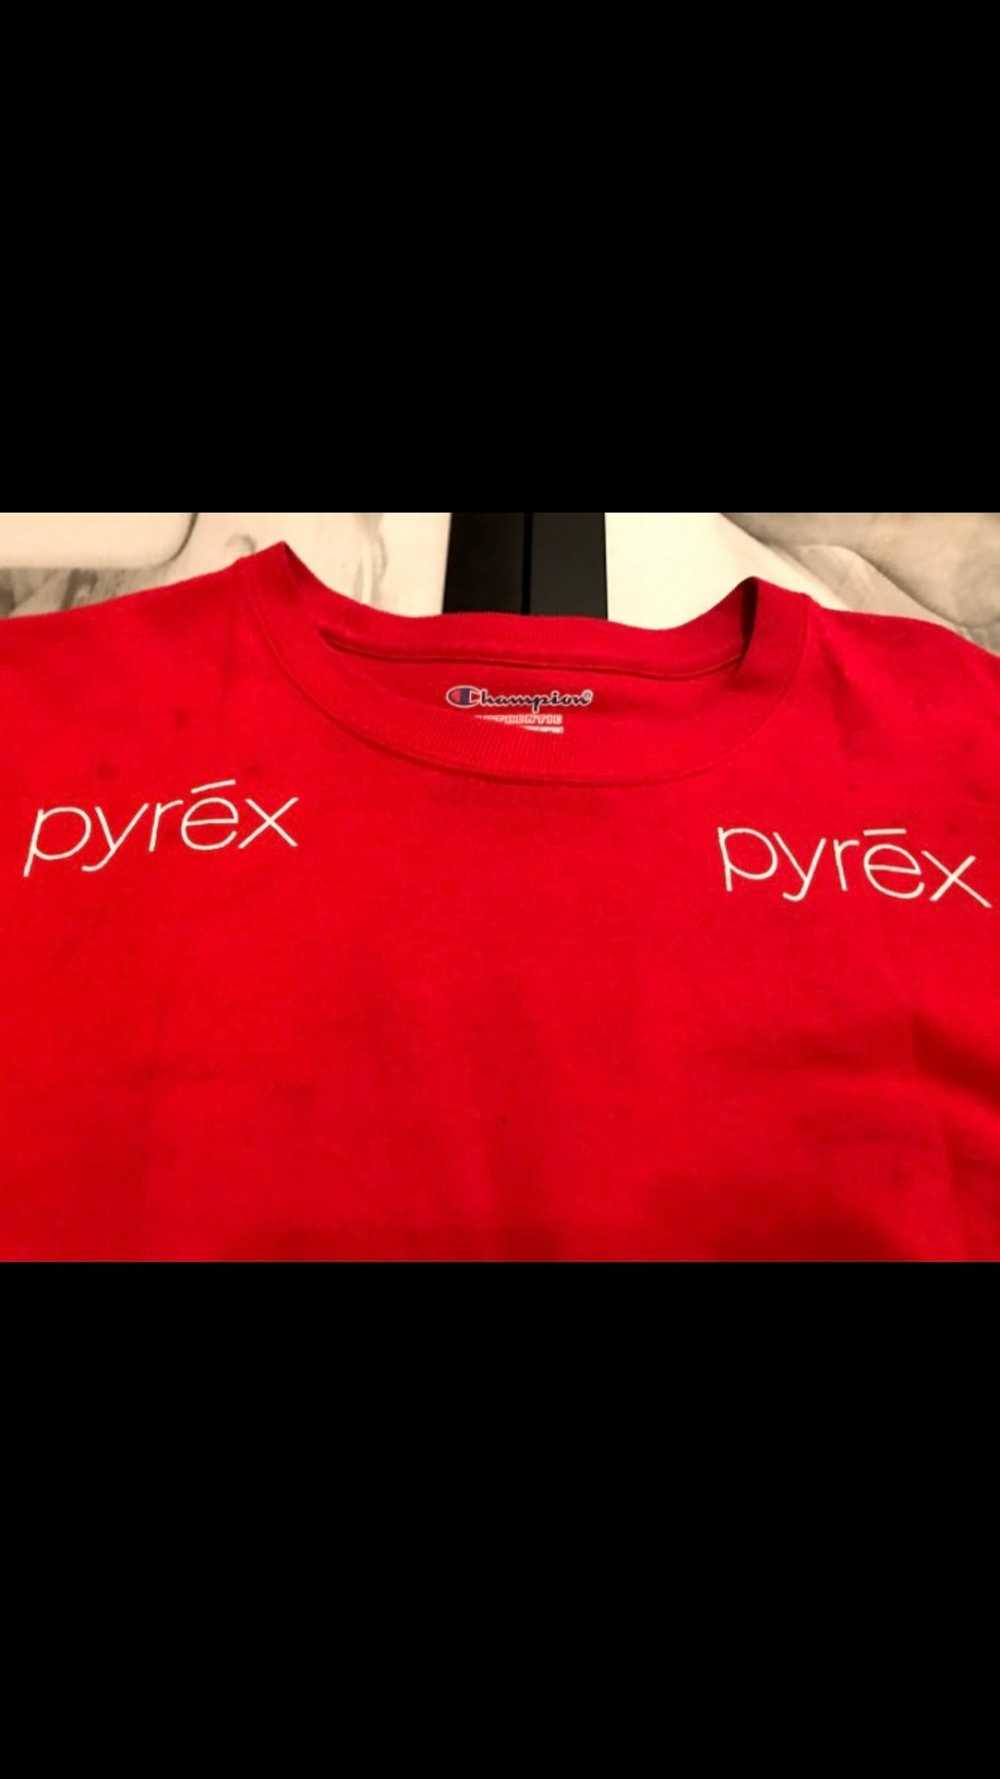 Pyrex Vision Pyrex Vision - image 5